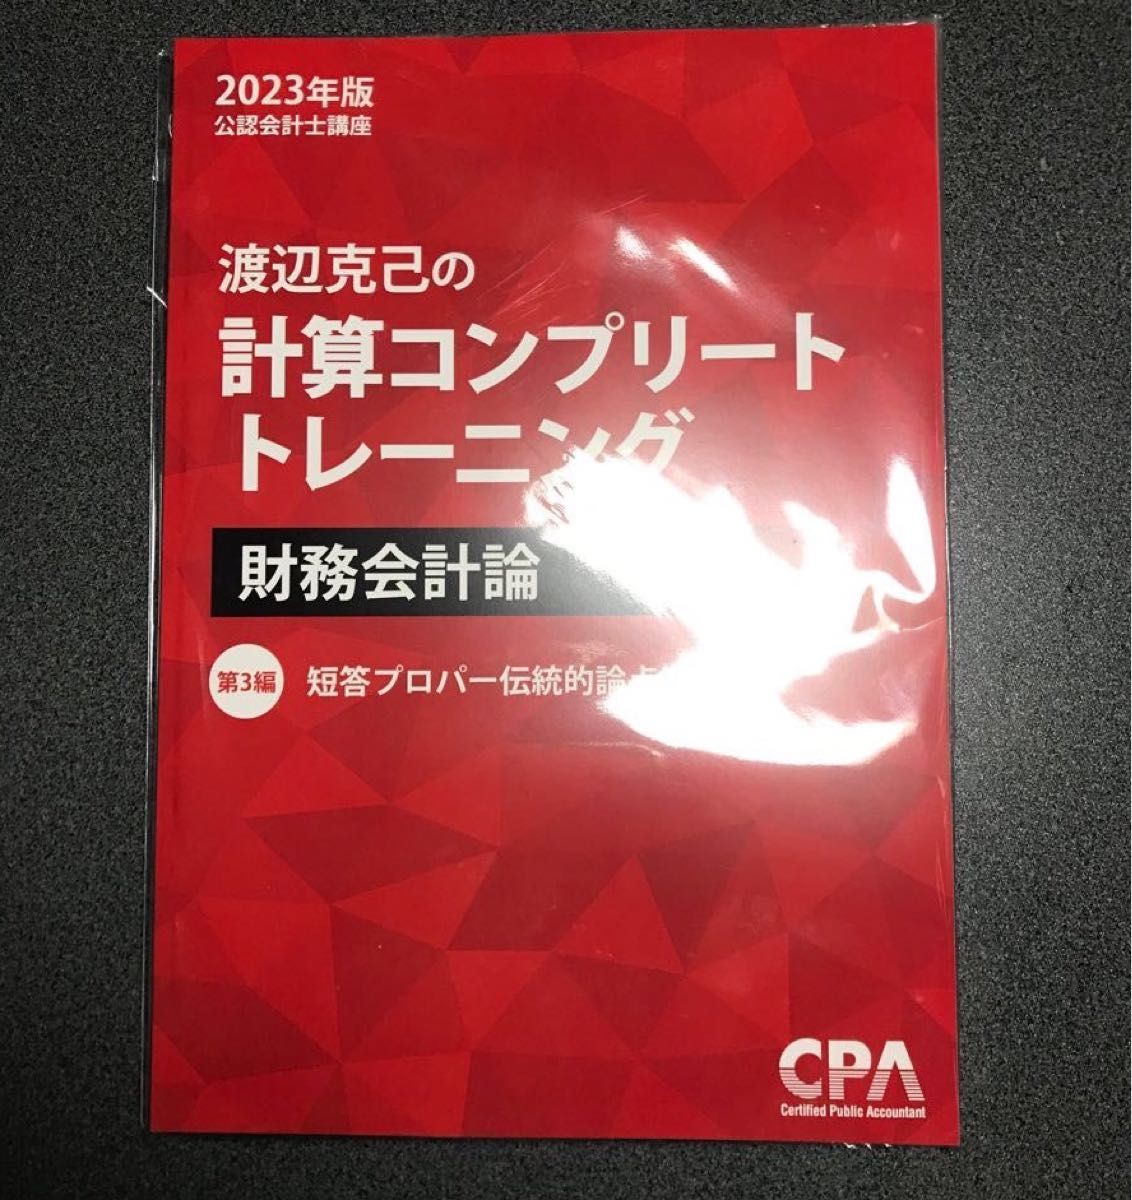 CPA 公認会計士 コンプリートトレーニング コントレ 財務会計論